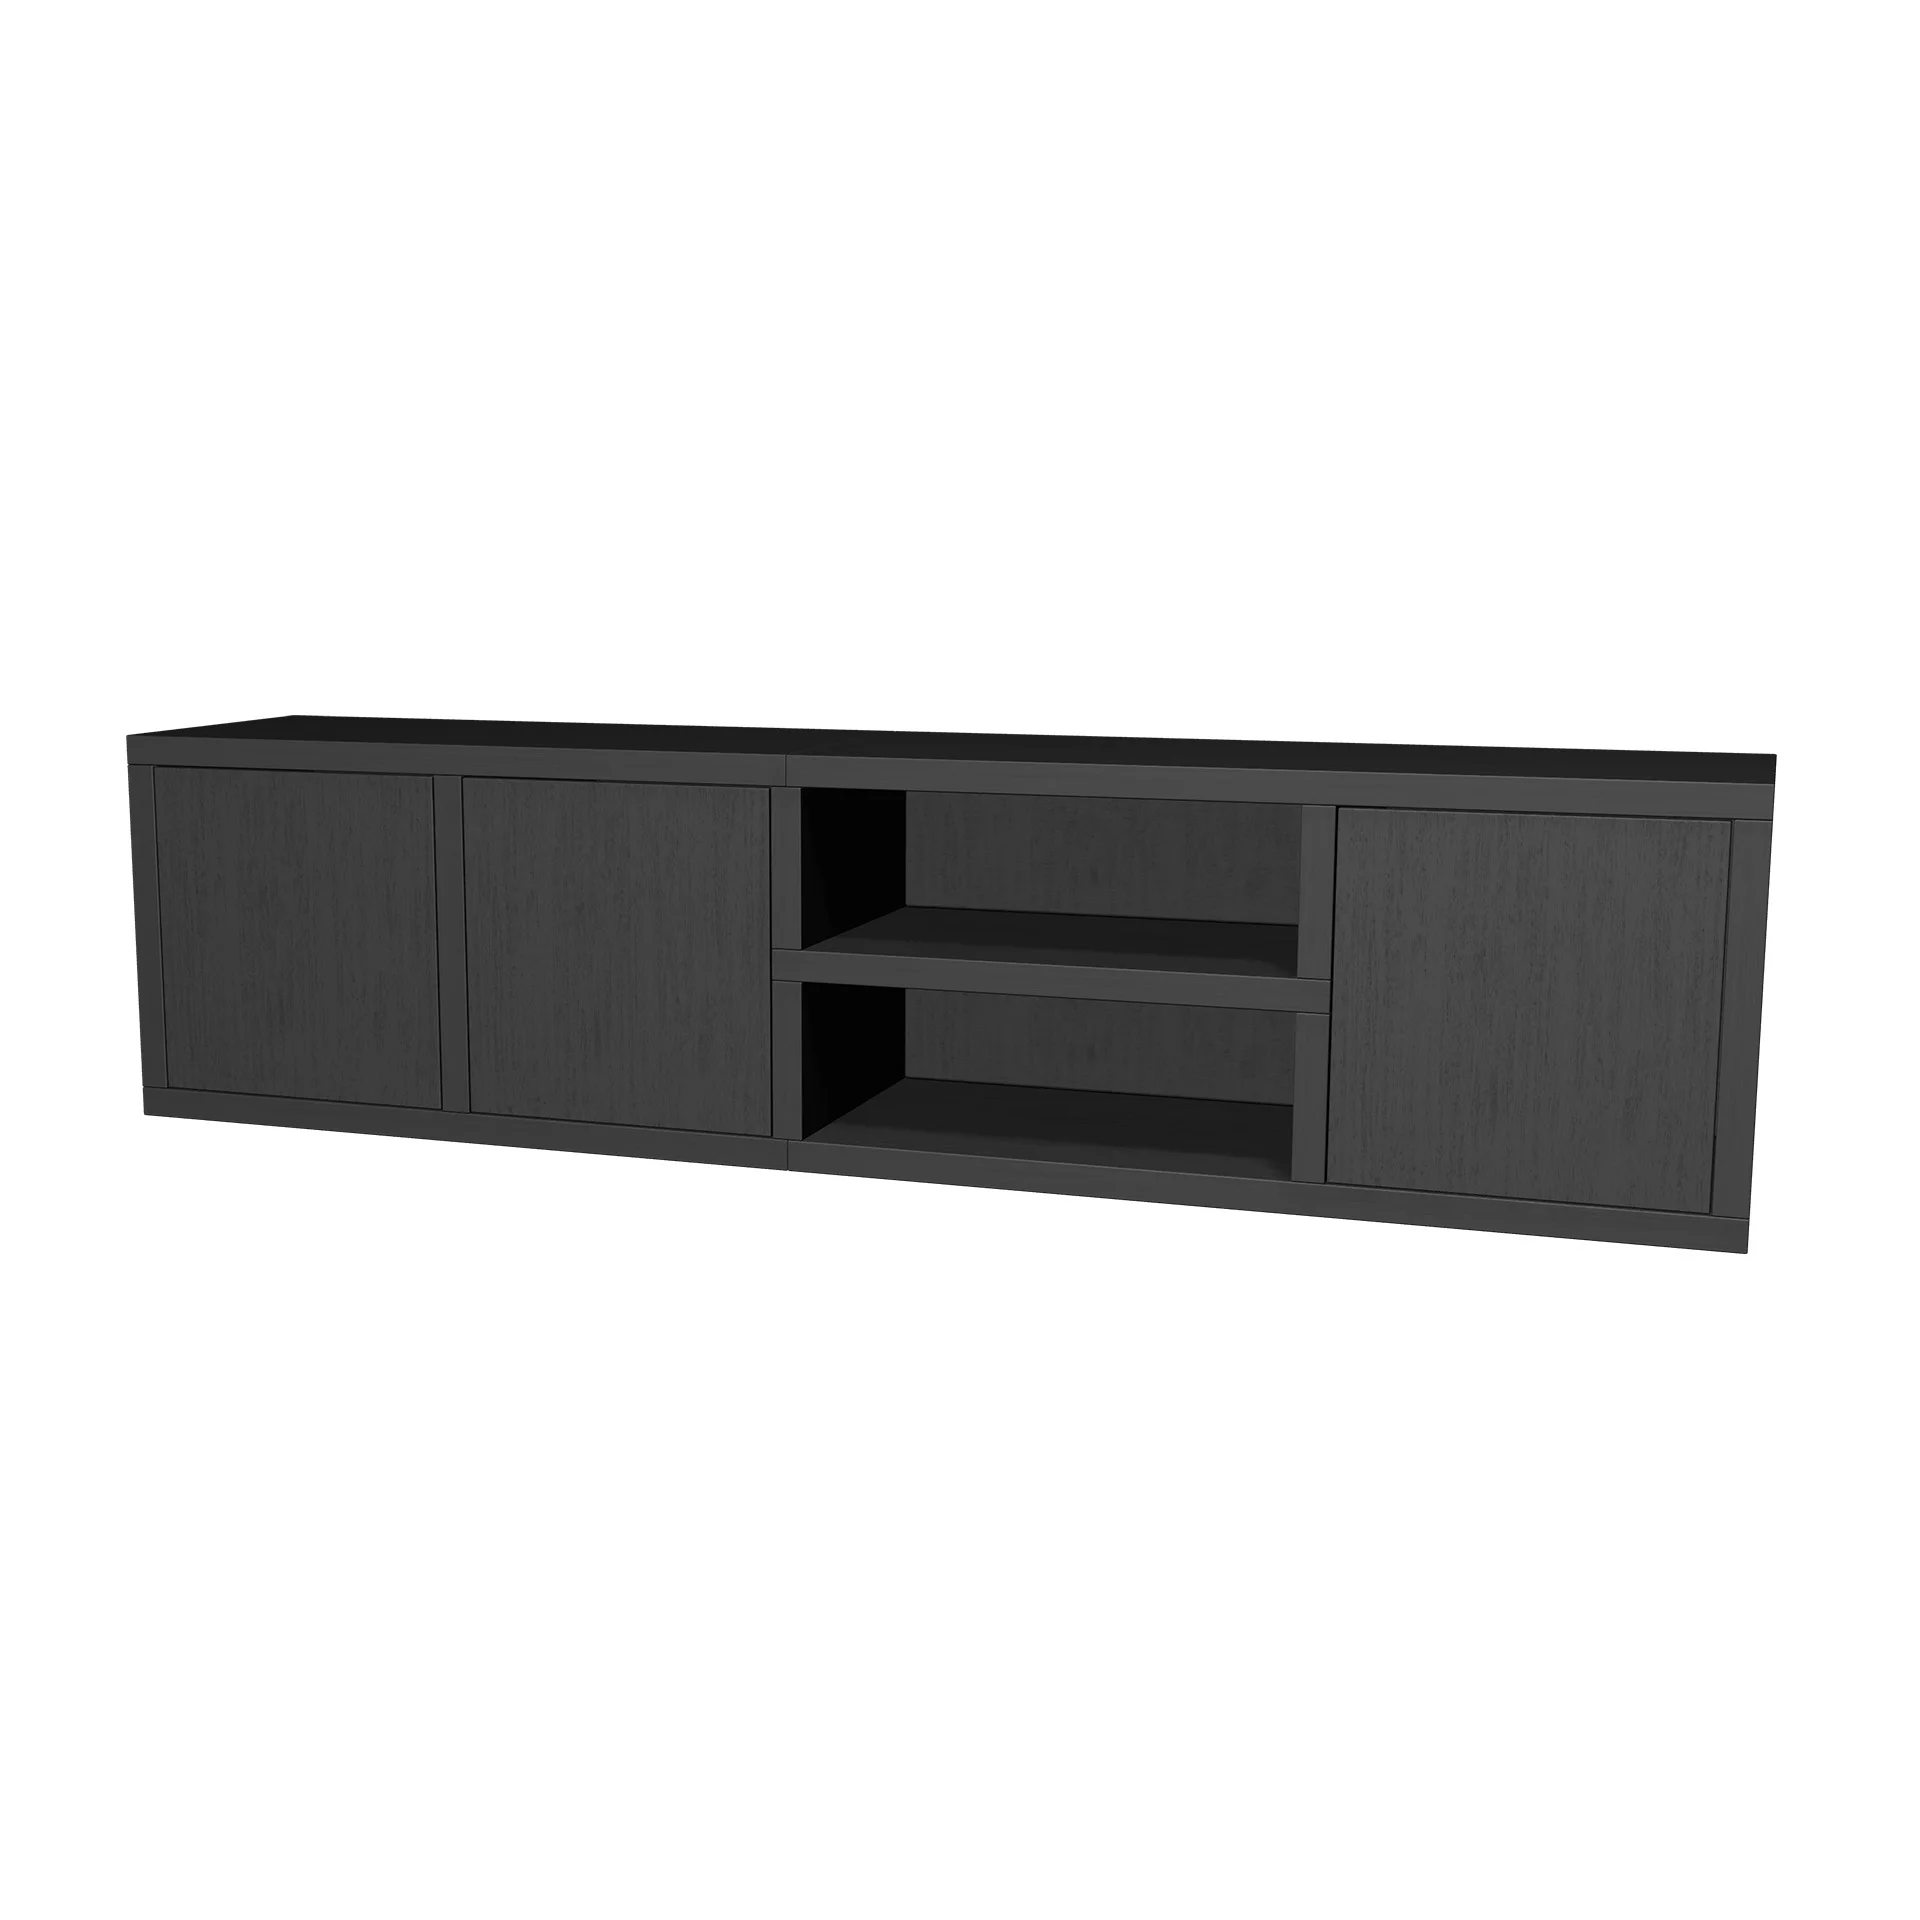 TSFC023 en panel mueble roble negro